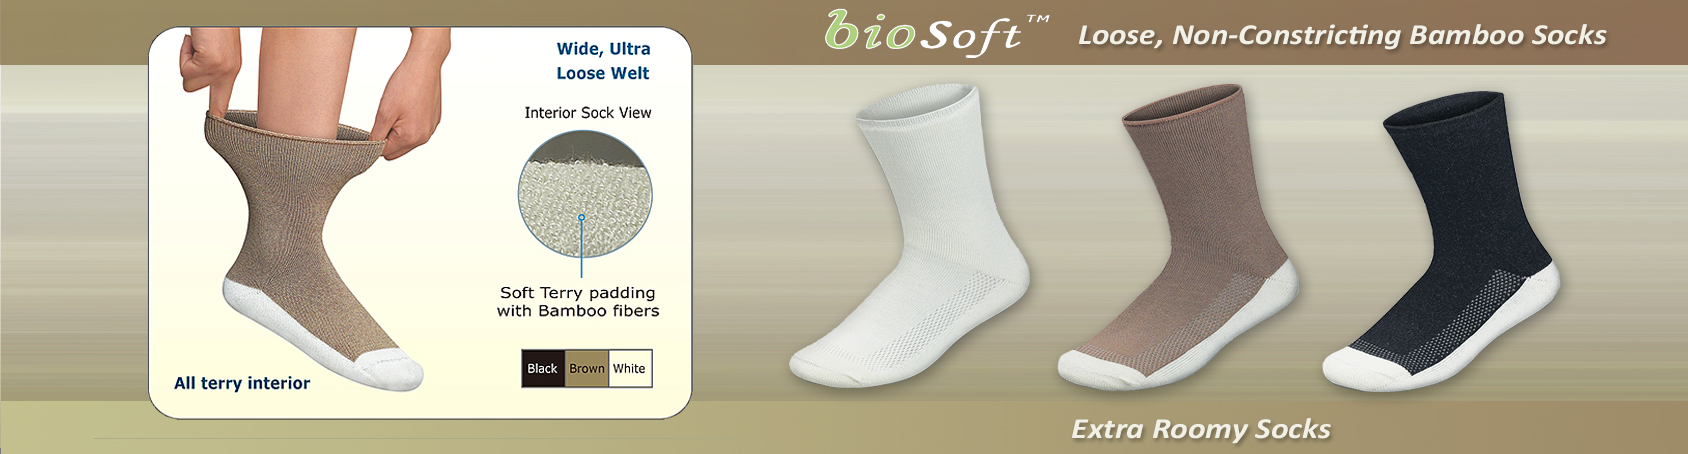 Seam Free Socks, Diabetic socks, Bamboo socks | Orthofeet